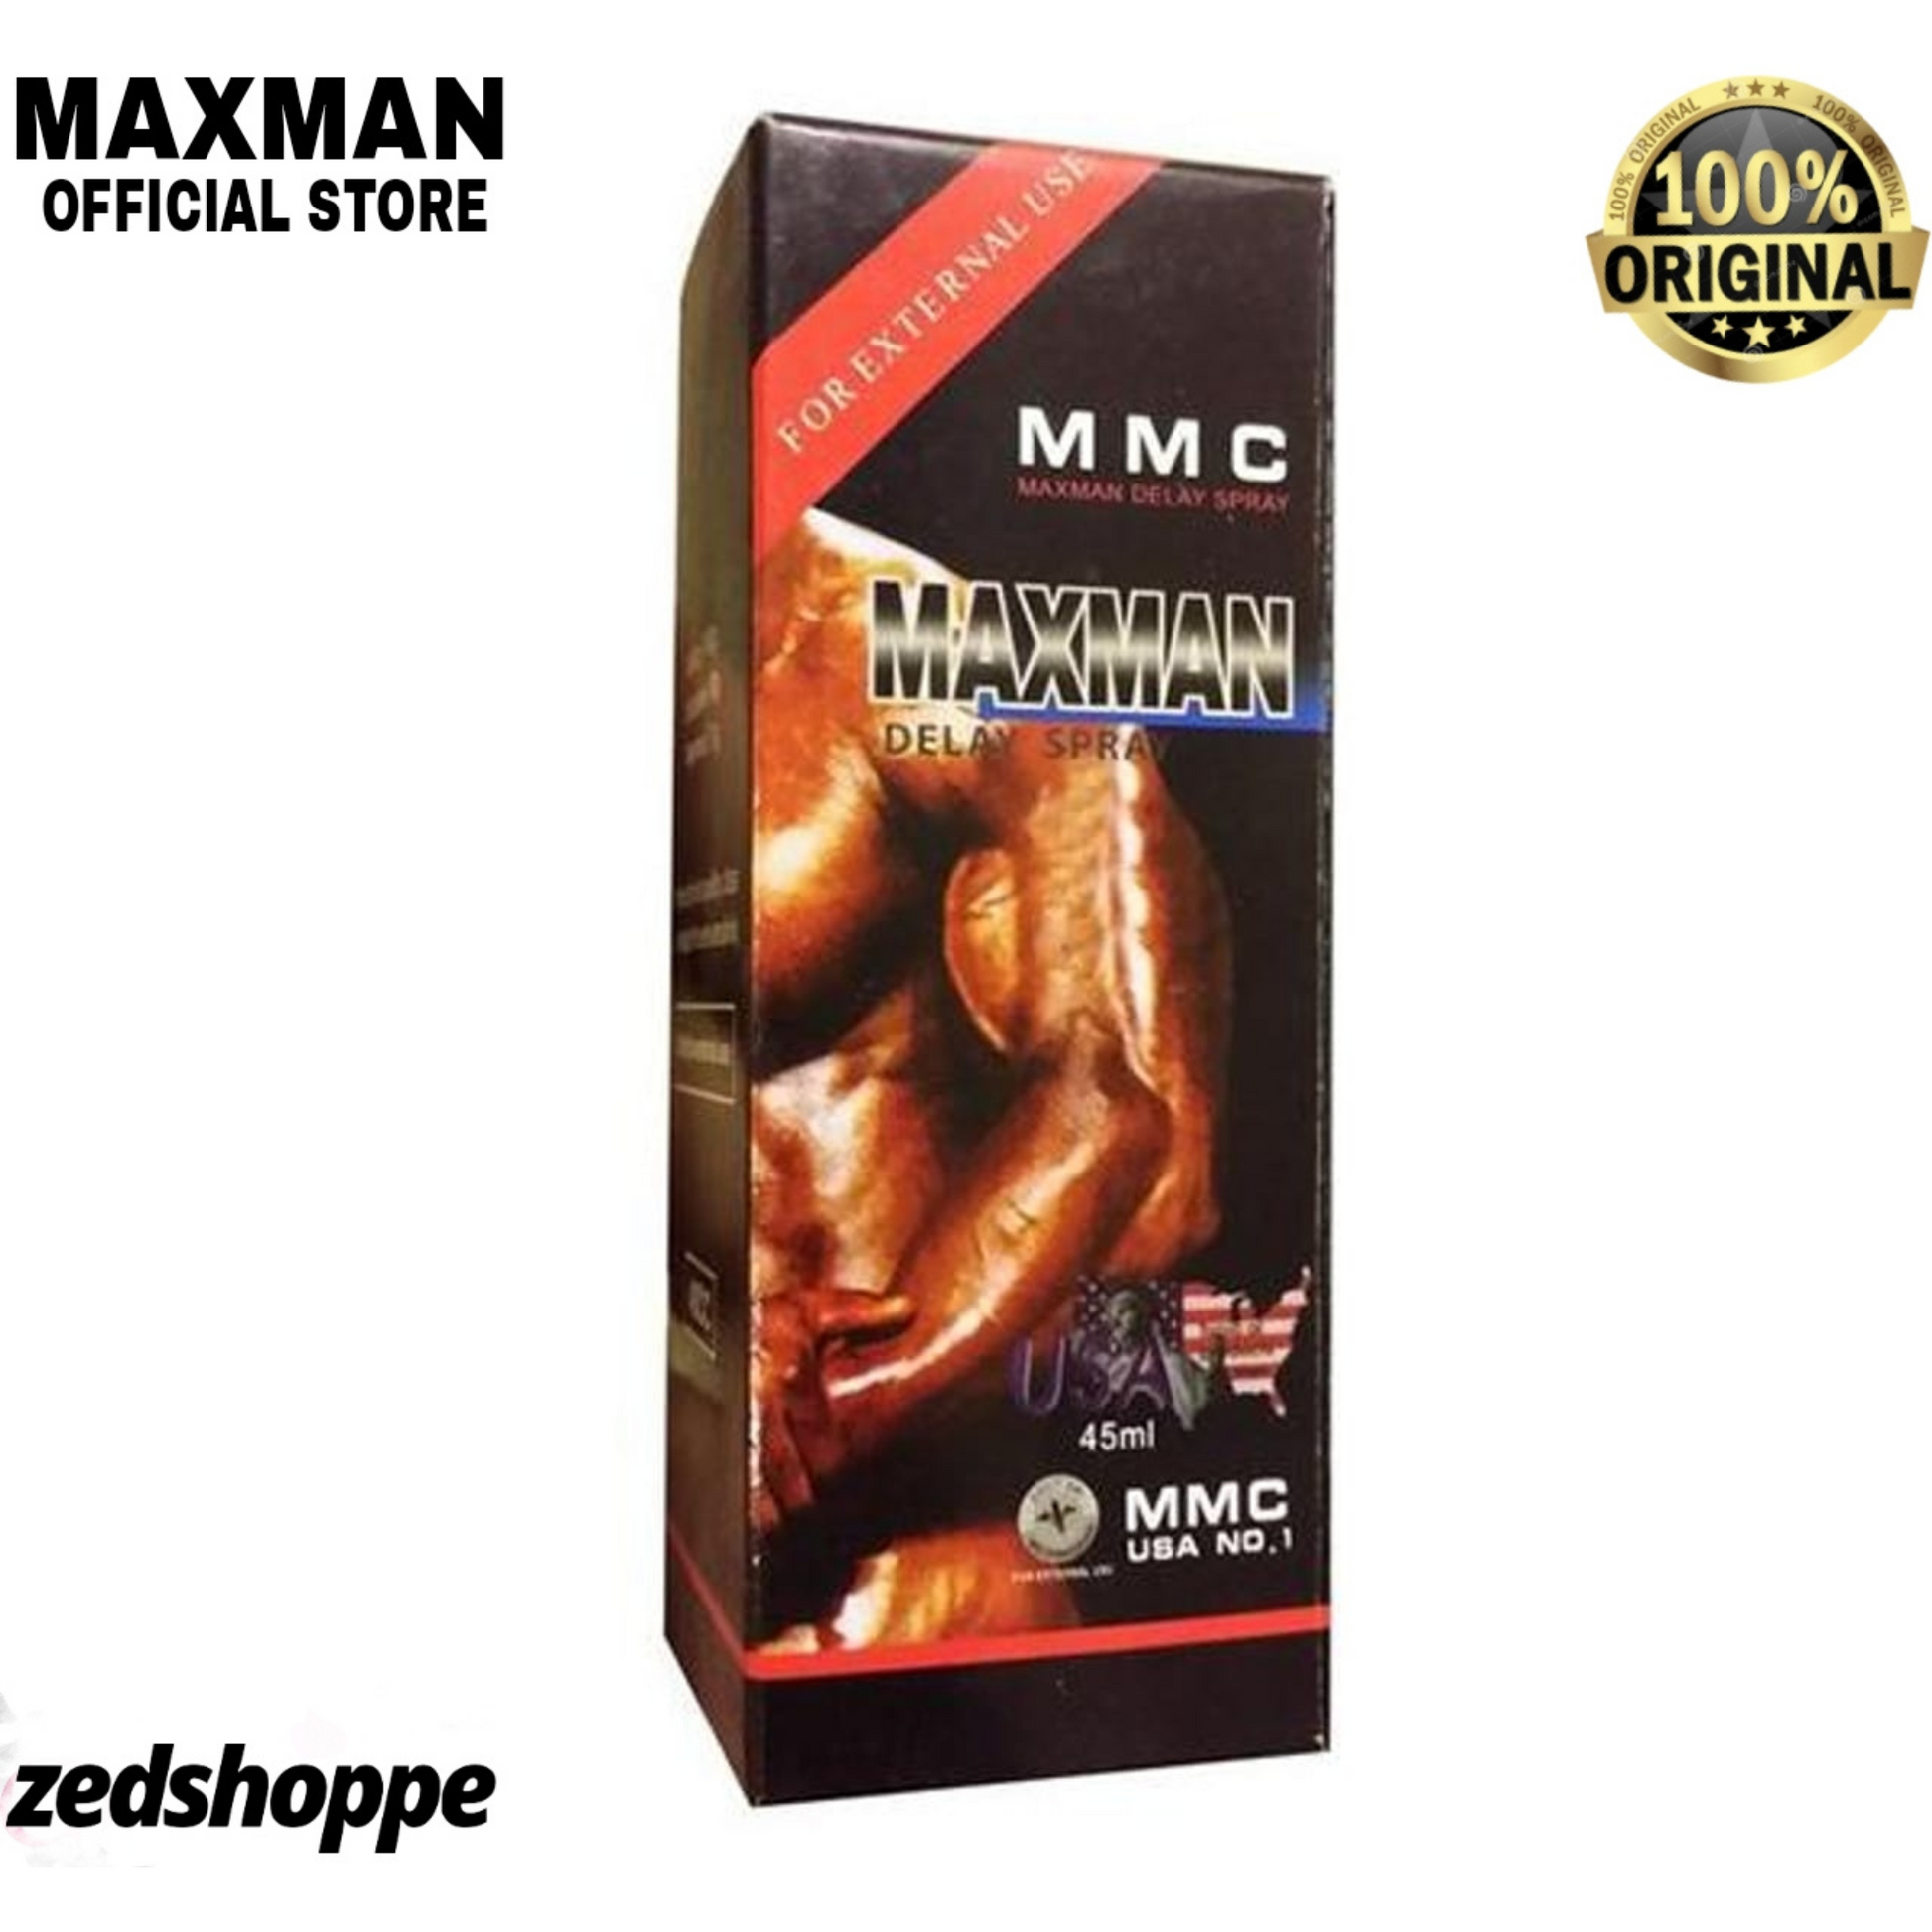 Maxman MMC Long Timing Delay Spray For Men In Pakistan.